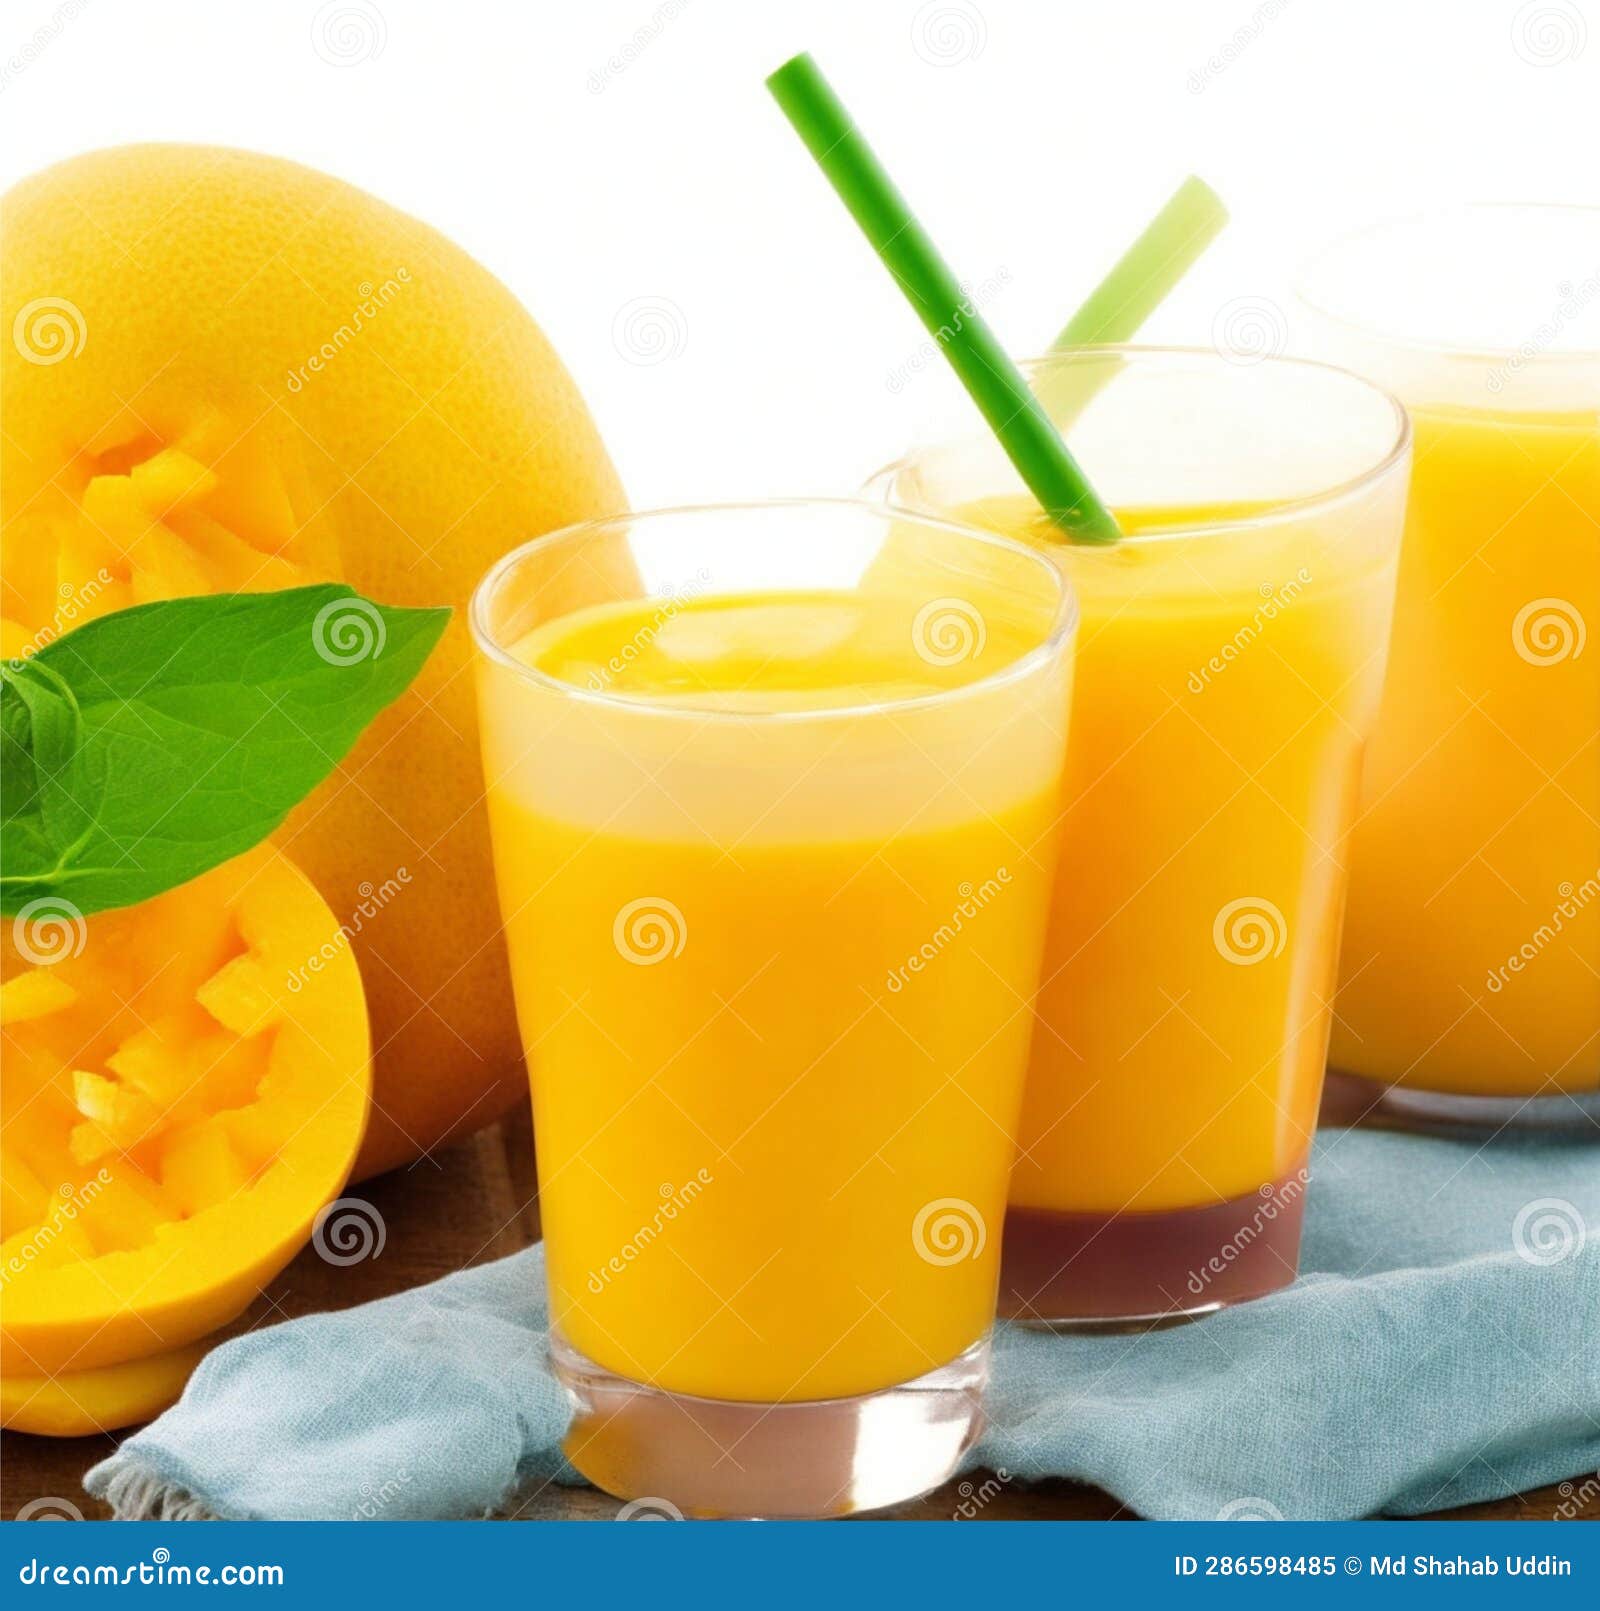 mango juice made with only the freshest, sweetest mangoes.